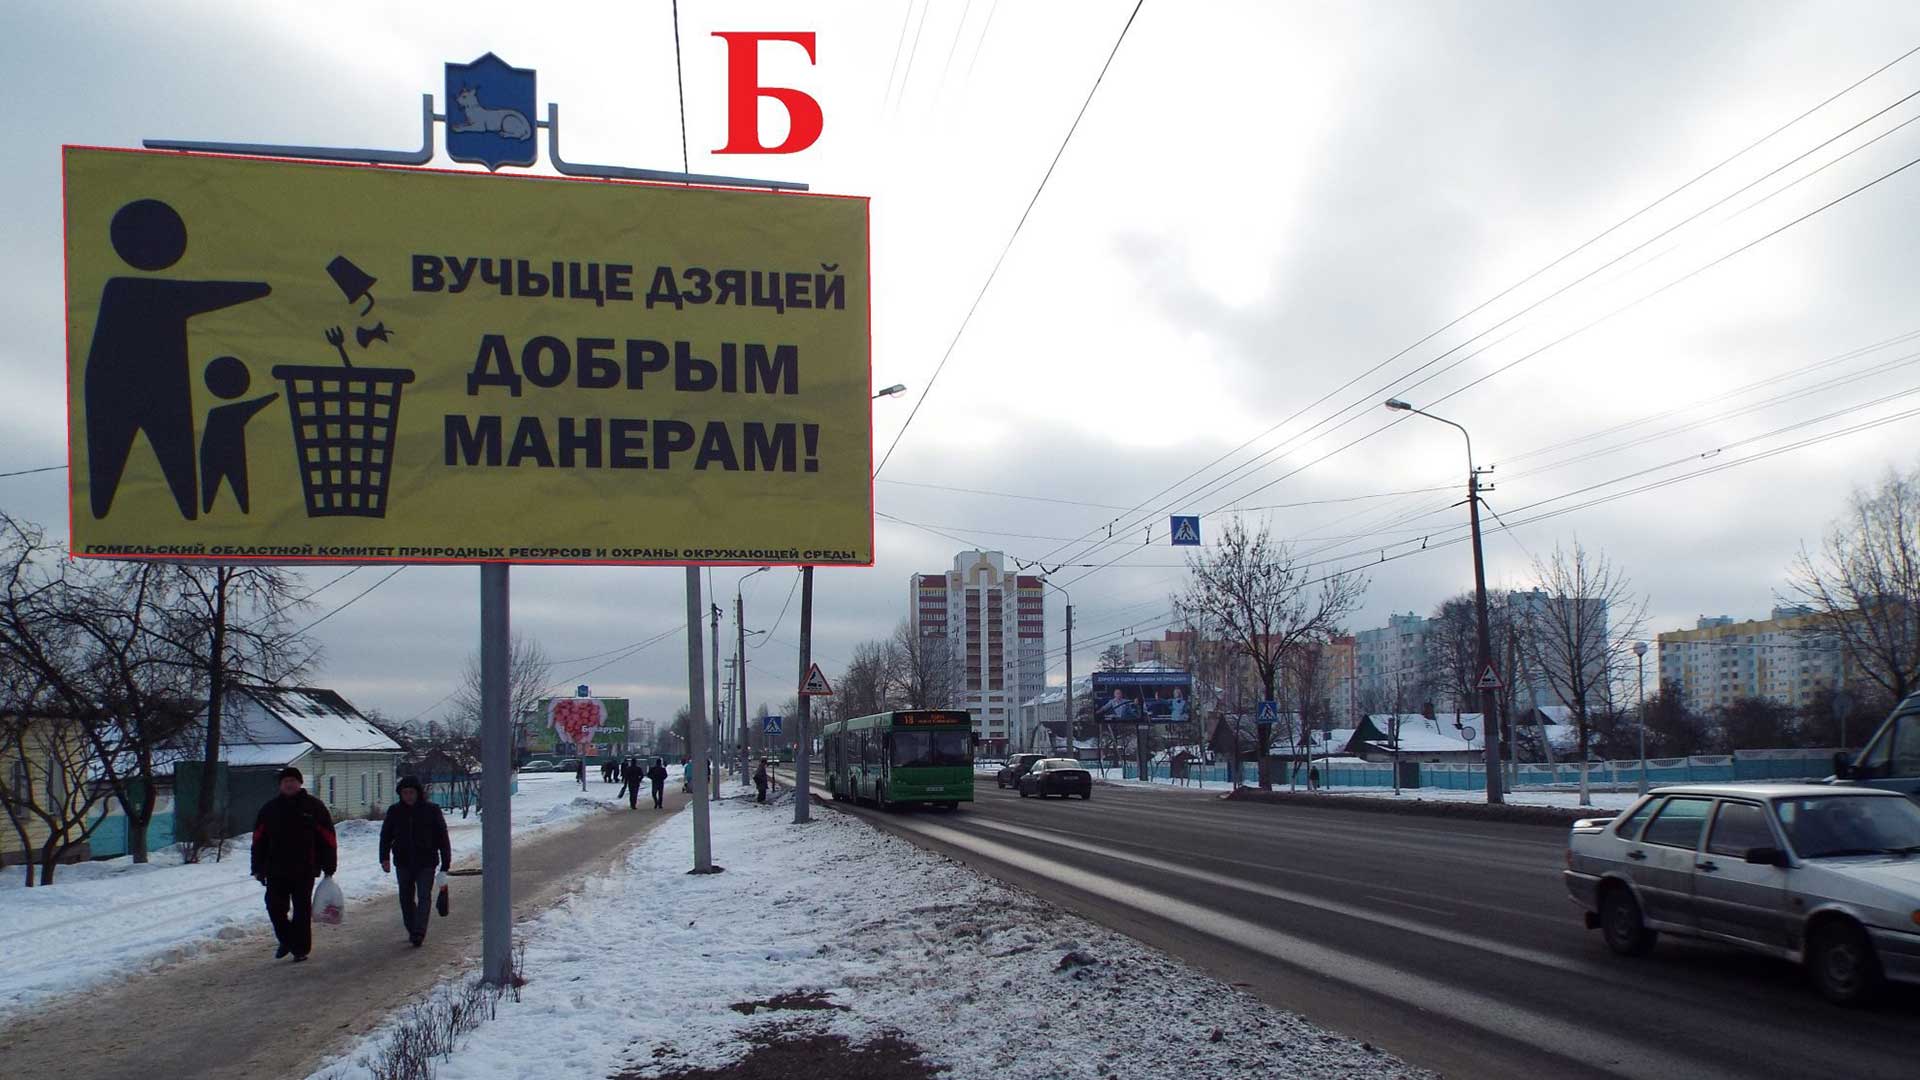 Билборд по ул. Ильича (переход напротив "Беларусбанка") (сторона Б)